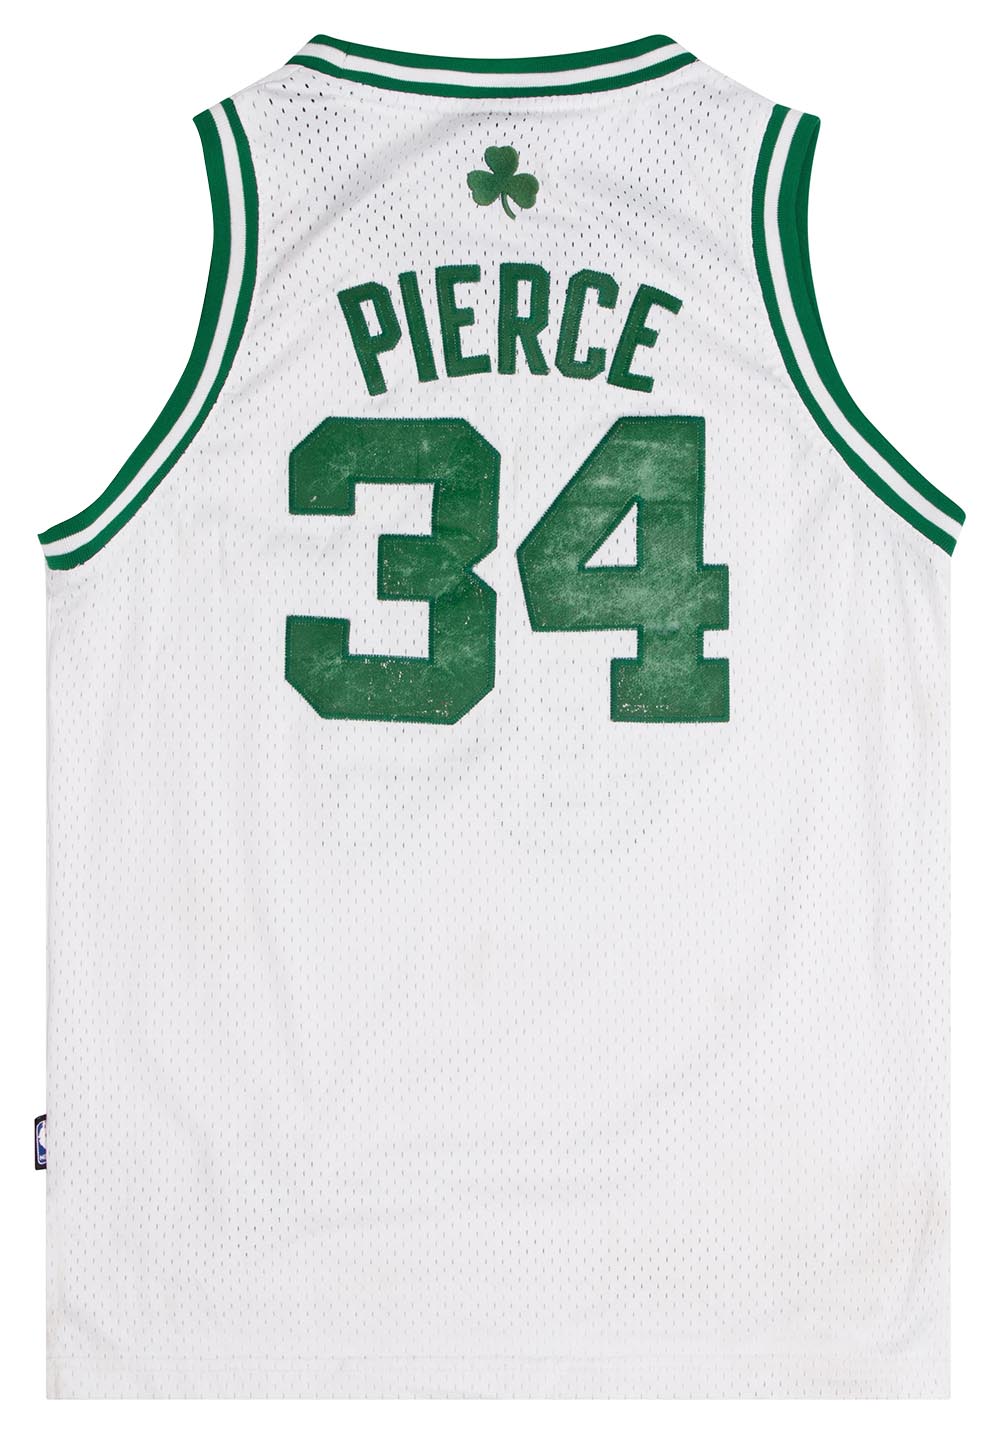 Adidas NBA All Star Game Paul Pierce Jersey